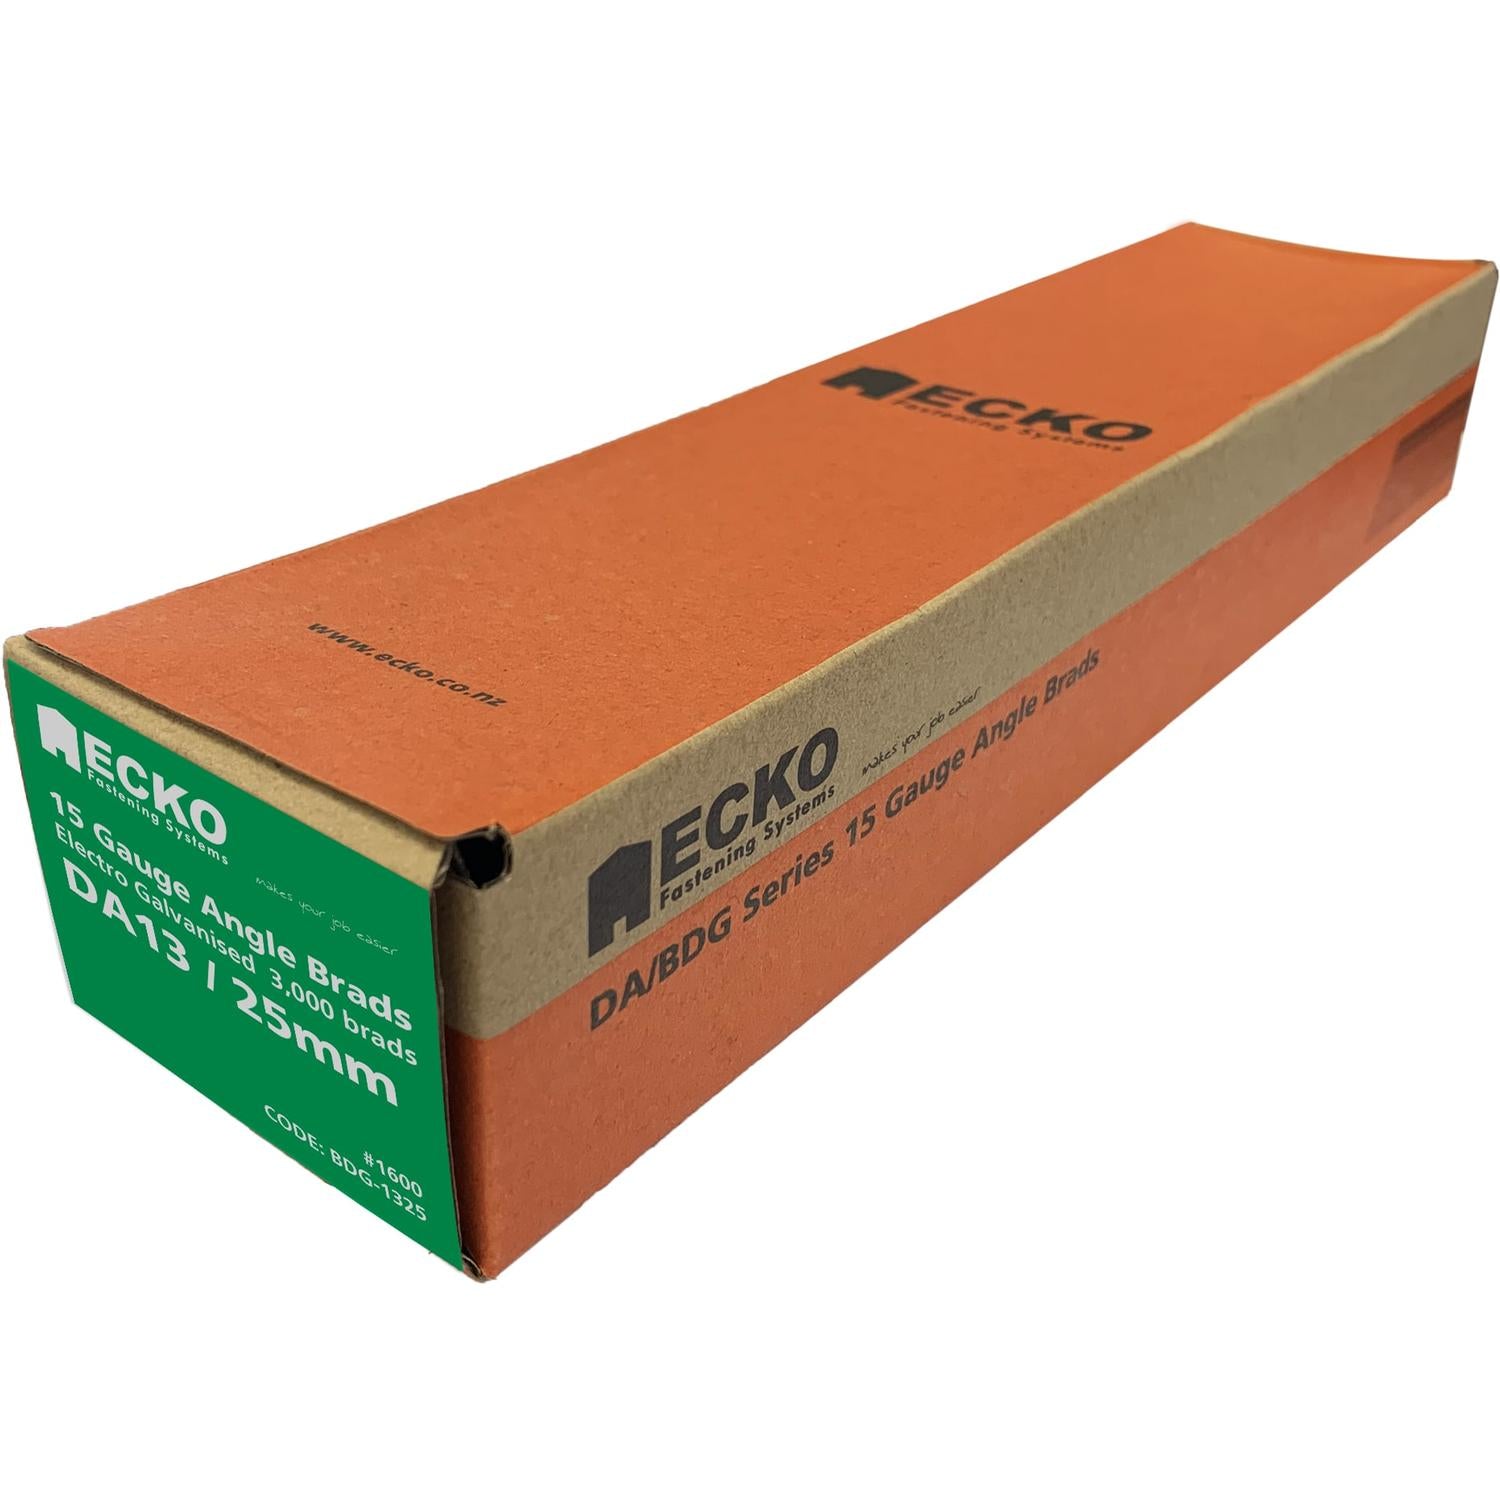 Ecko 15G X 25Mm Angle Brads Electro Galvanised (1000 Box)